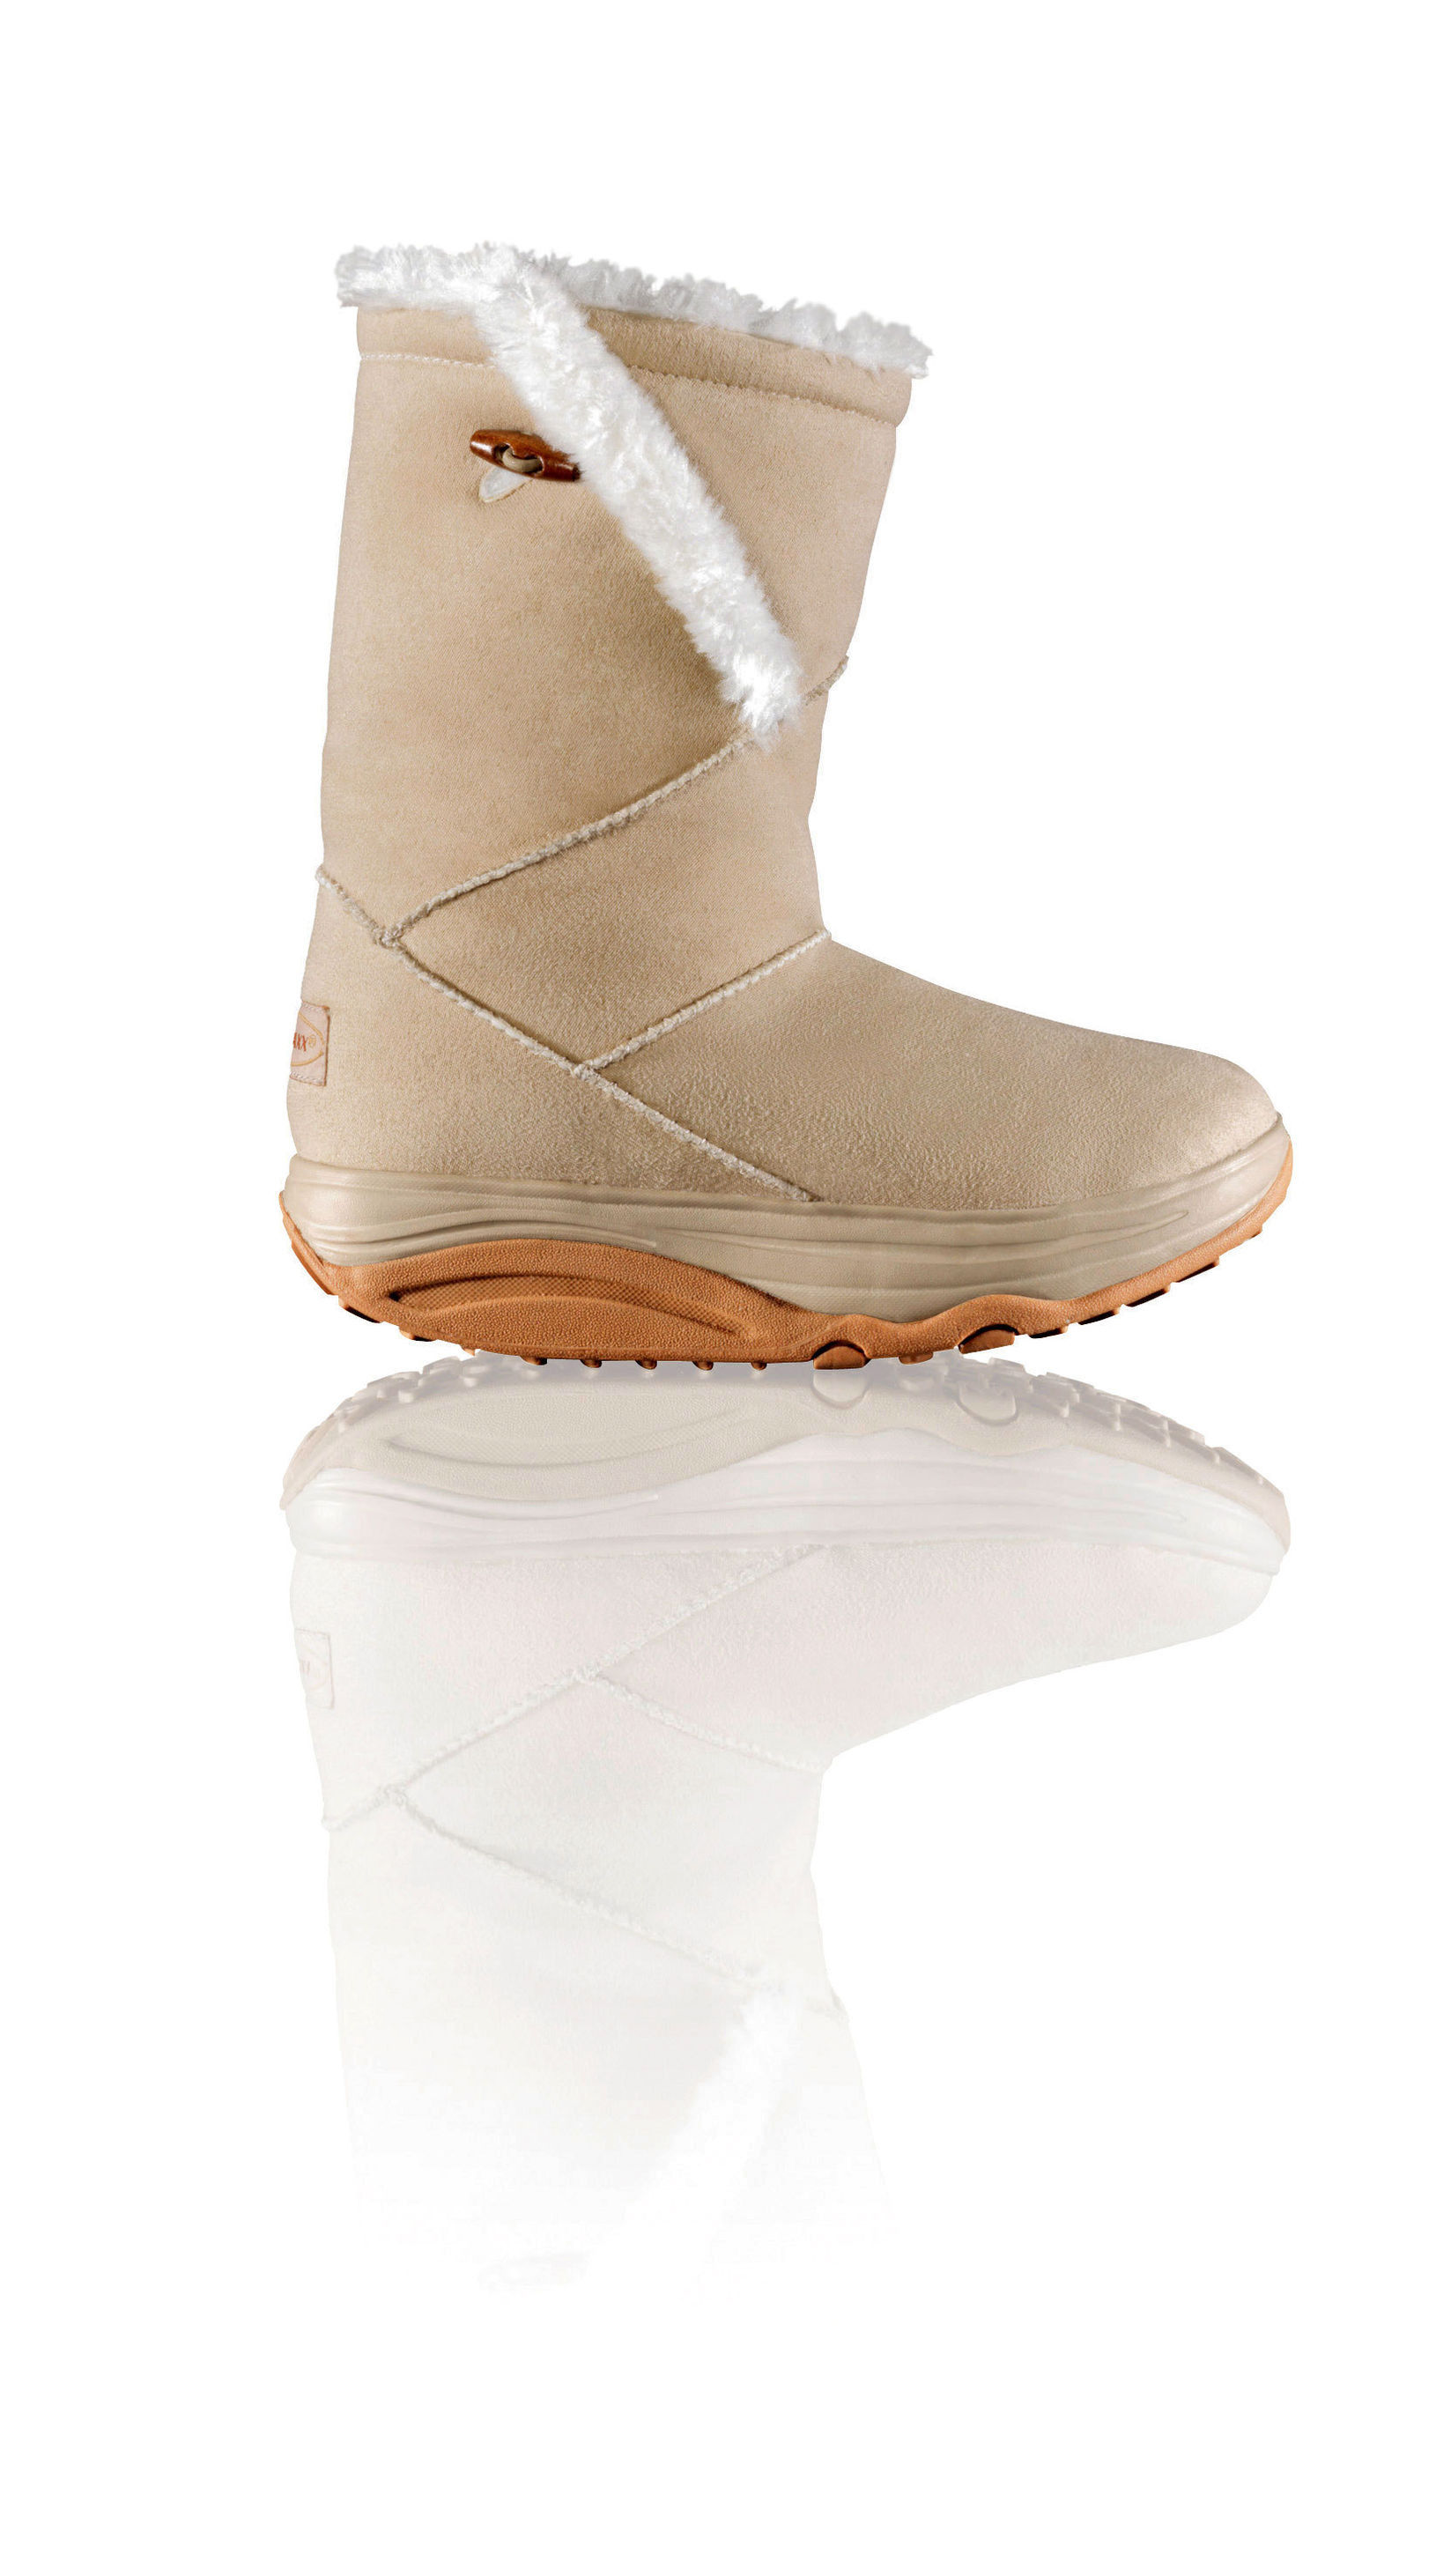 WalkMaxx Fitness-Boots, beige Größe: 42 bestellen | Weltbild.de